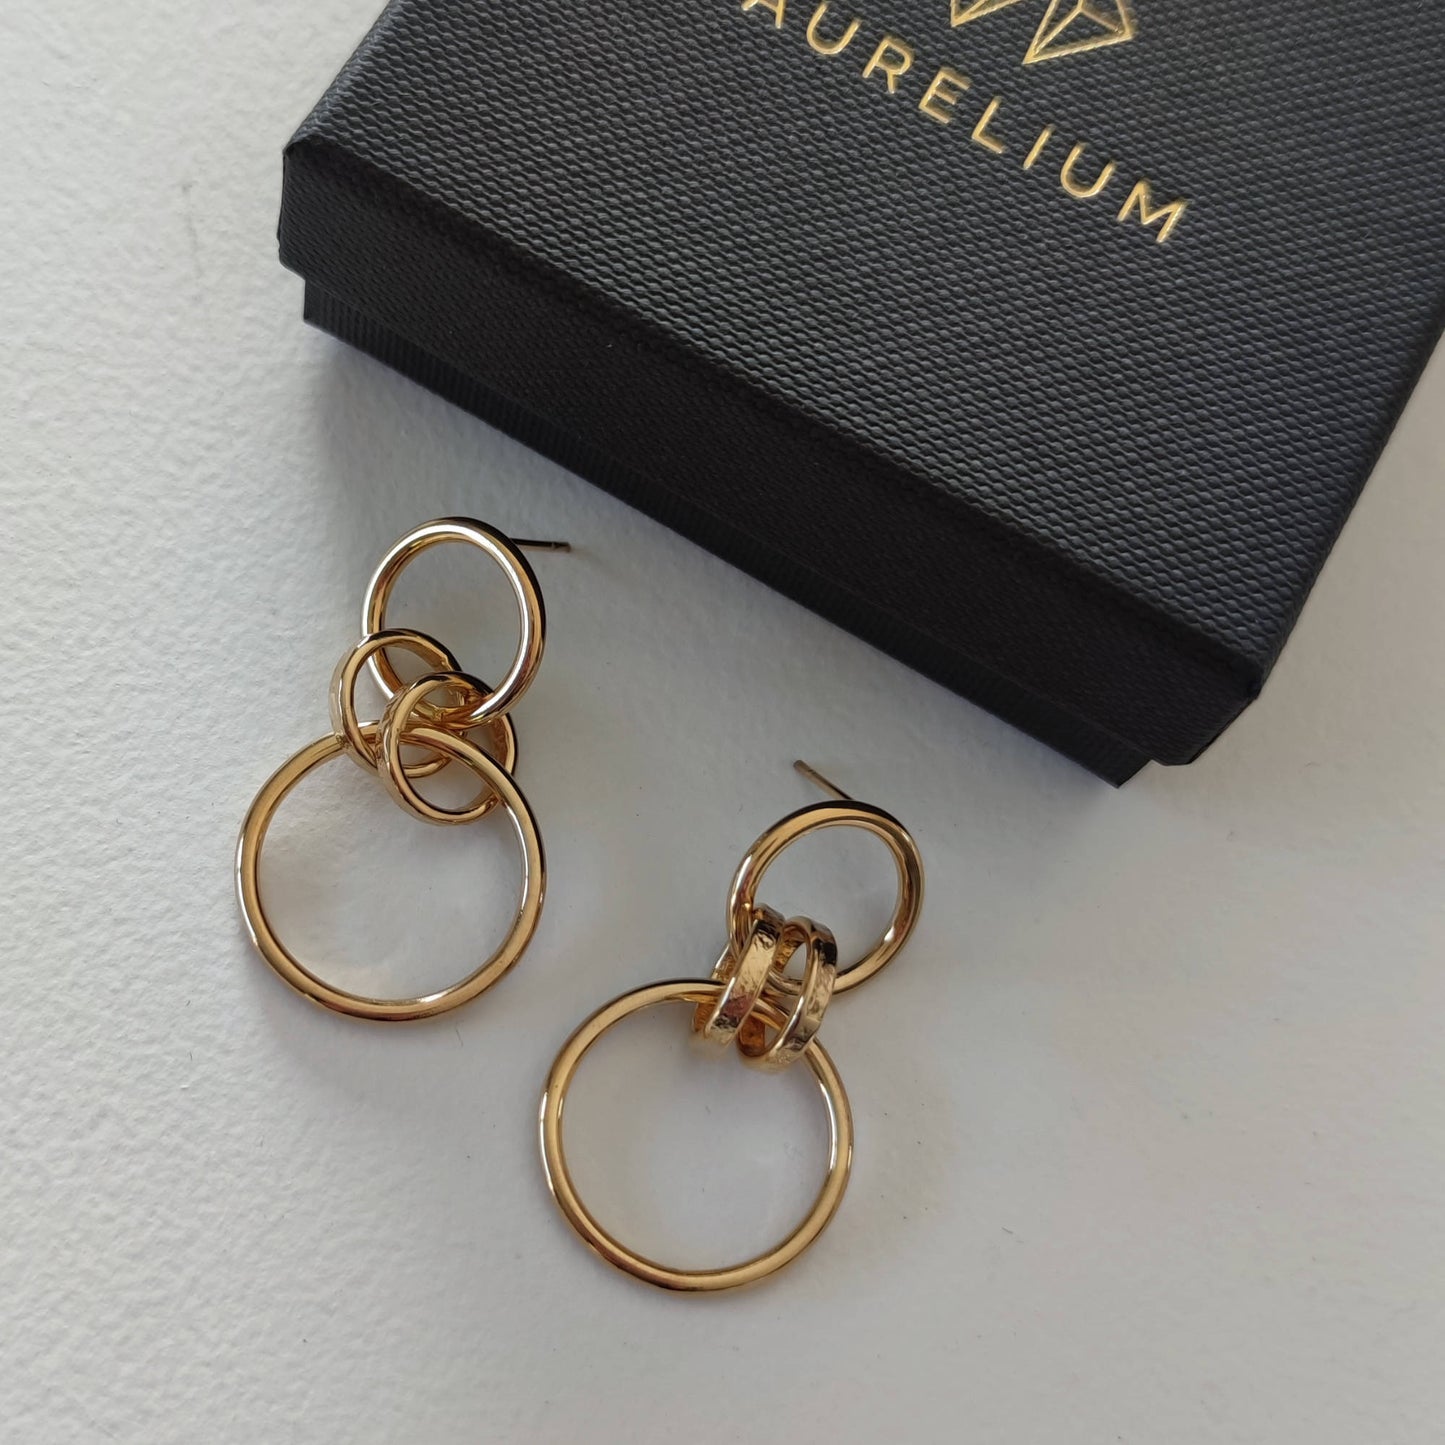 handmade gold link earrings made in nz in gift box